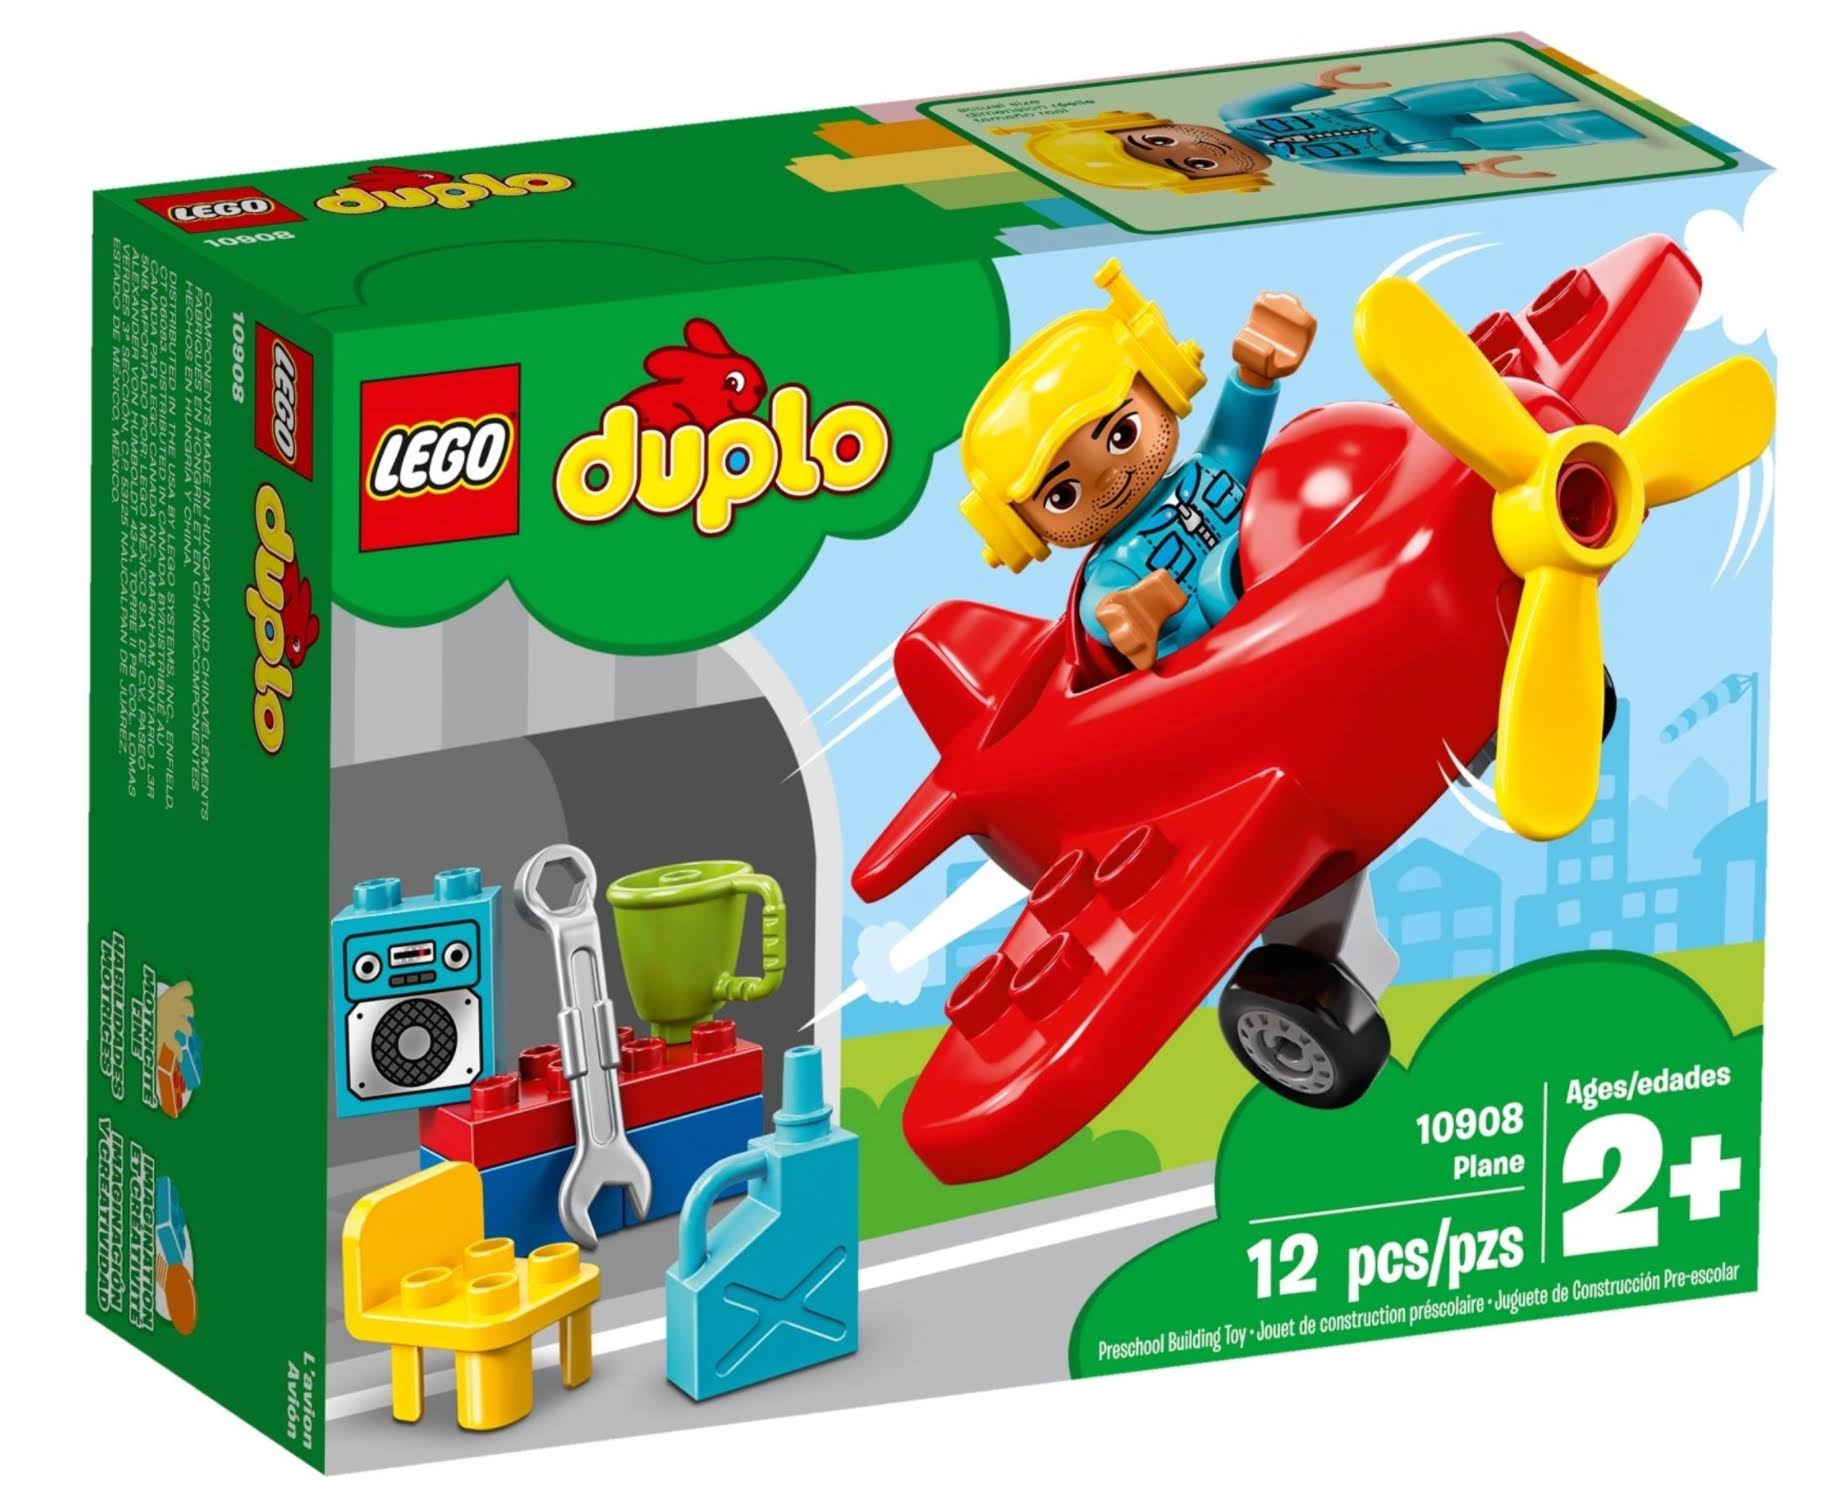 Lego 10908 Duplo Plane